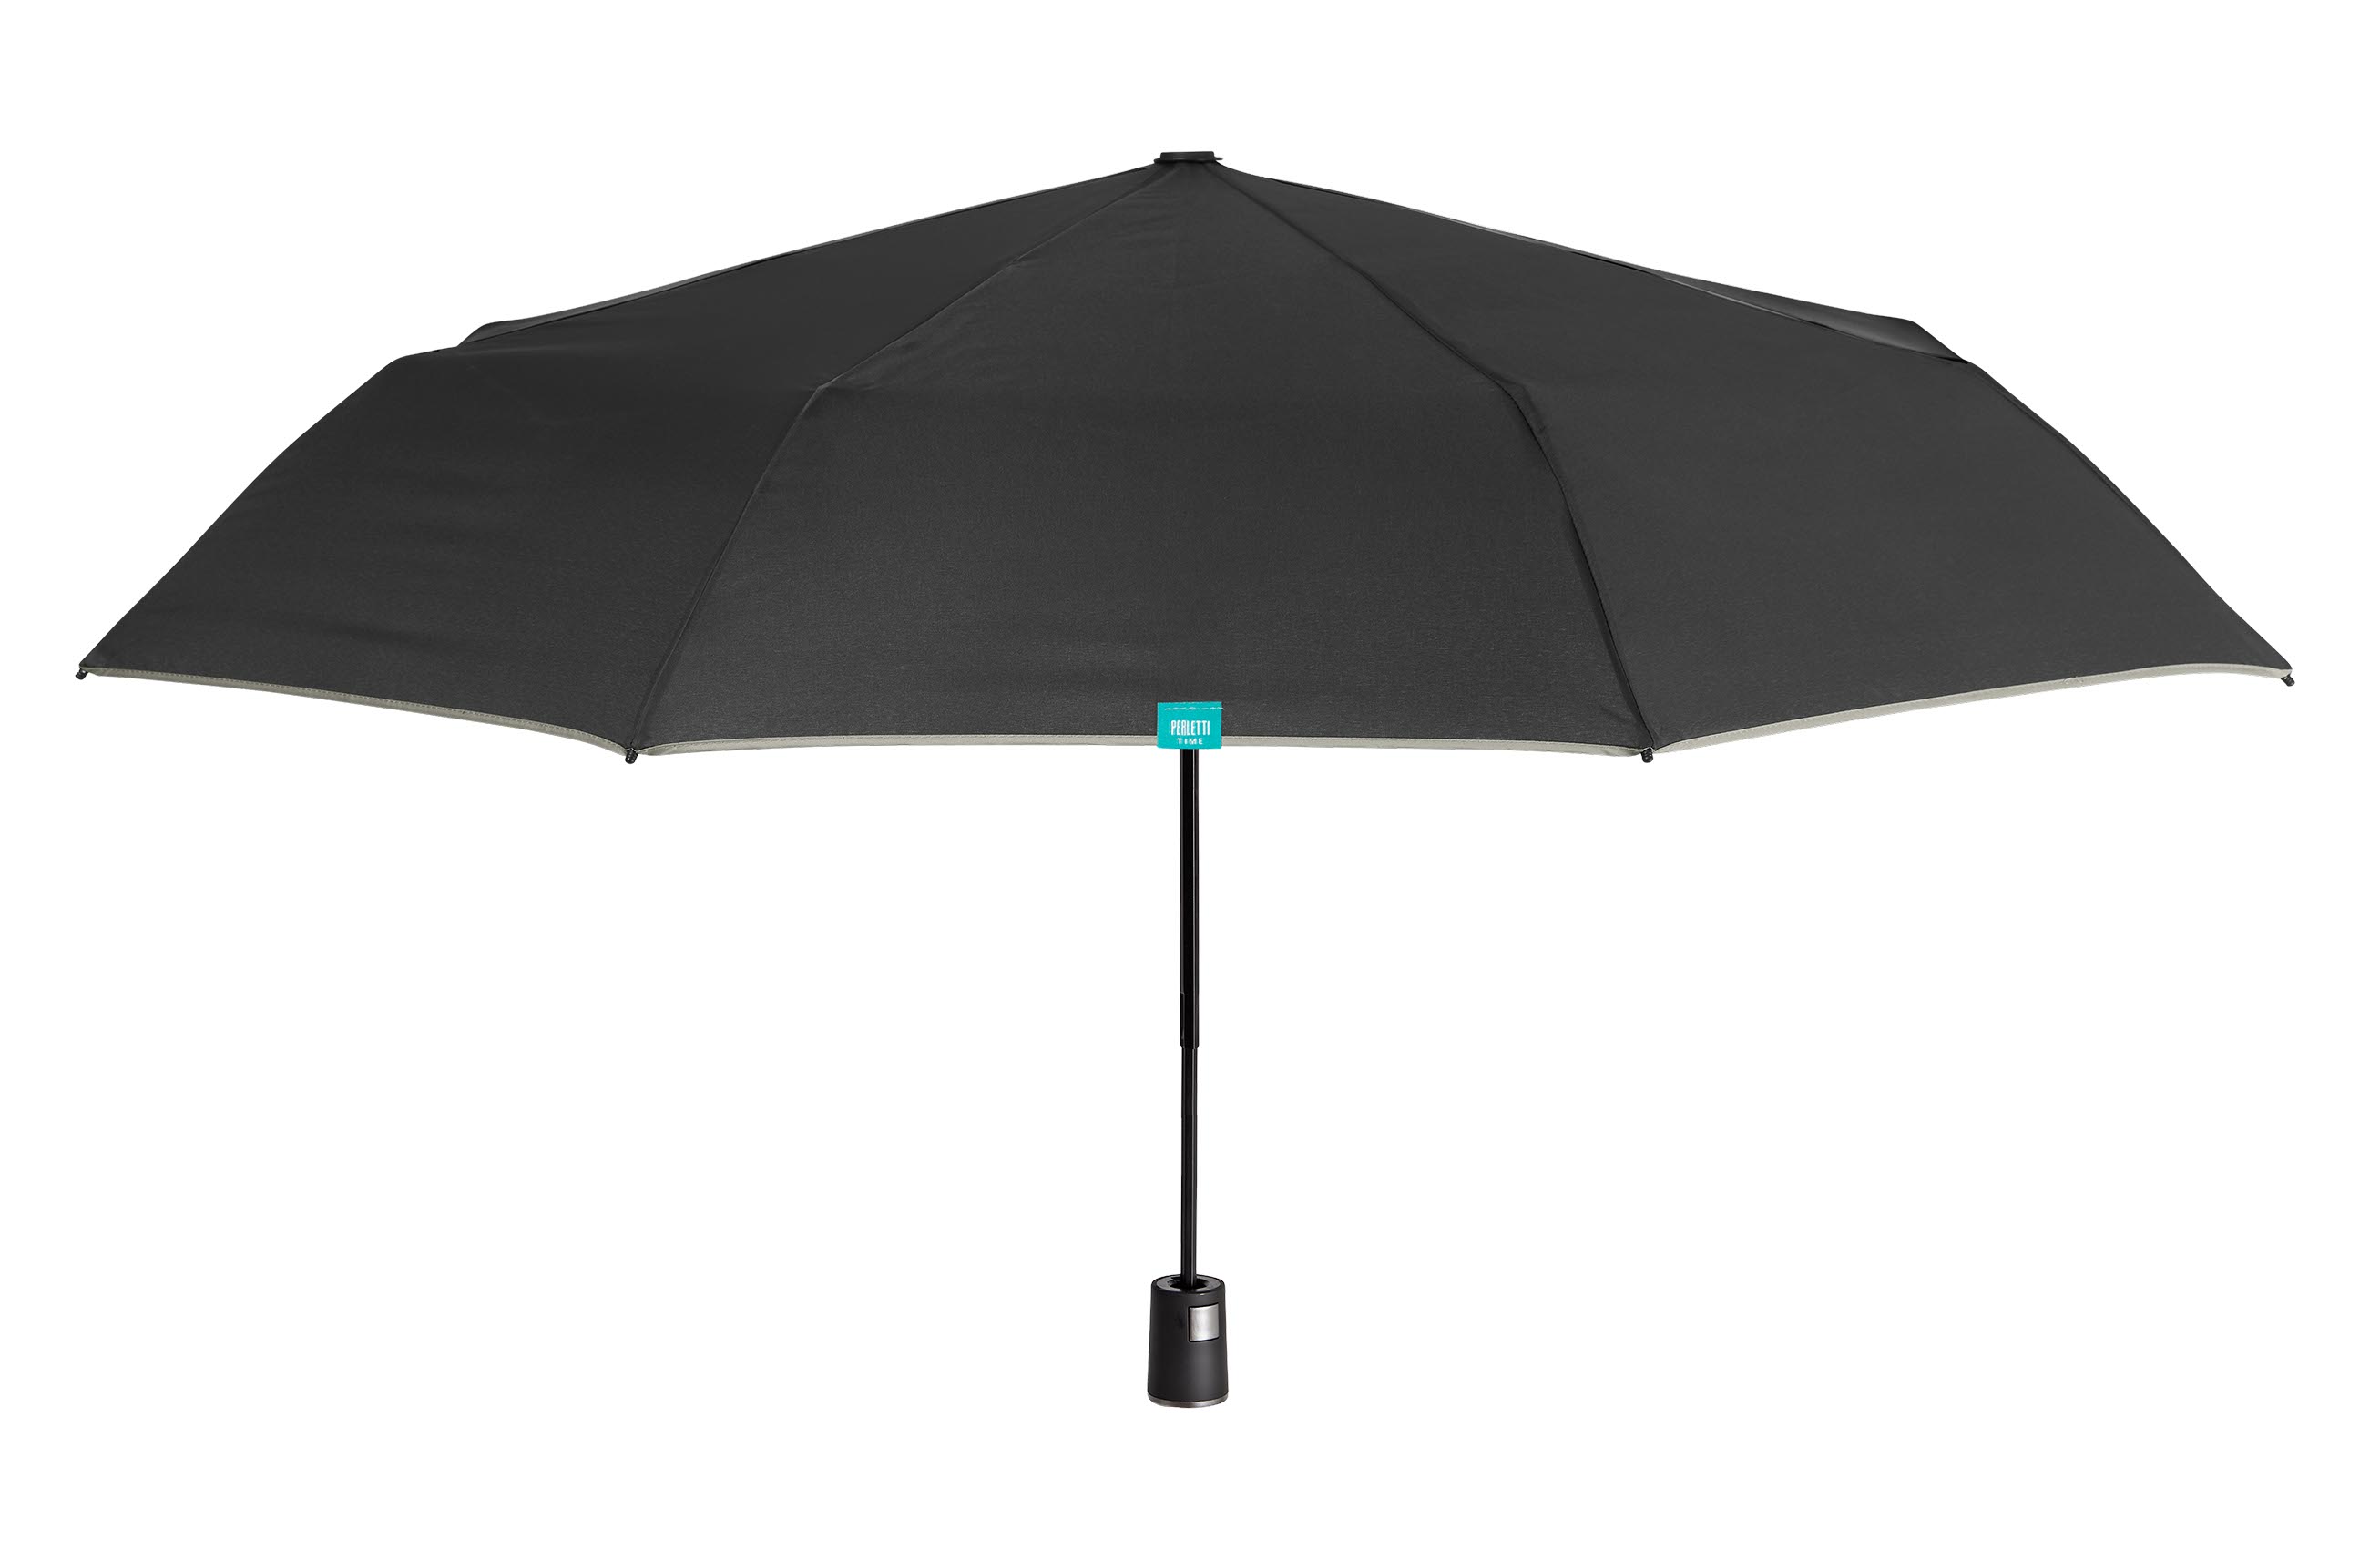 Perletti Pánský skládací deštník 26338.3